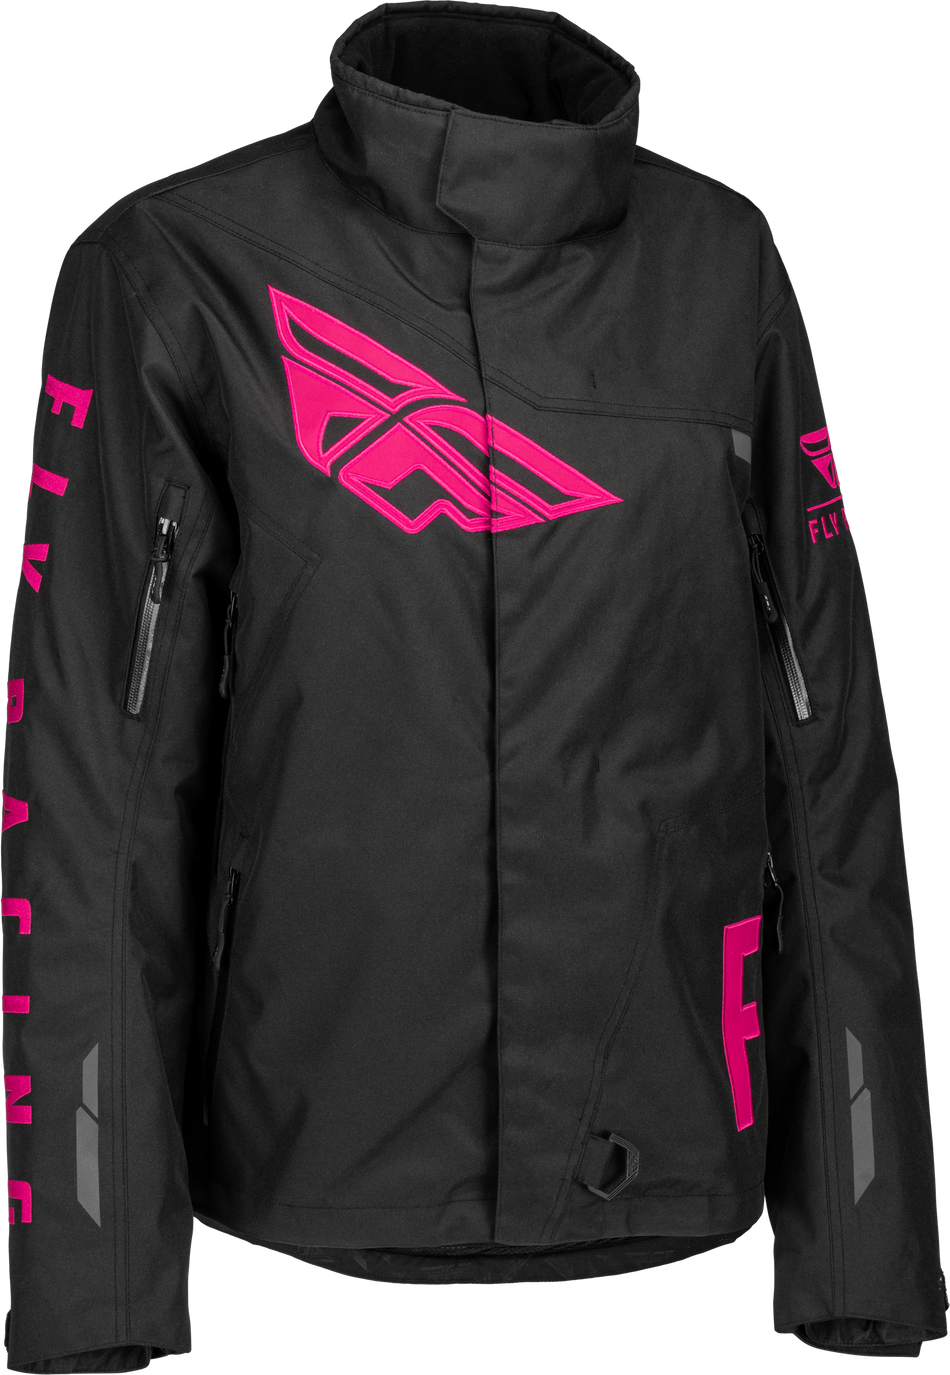 FLY RACING Women's Snx Pro Jacket Black/Pink Sm 470-4512S